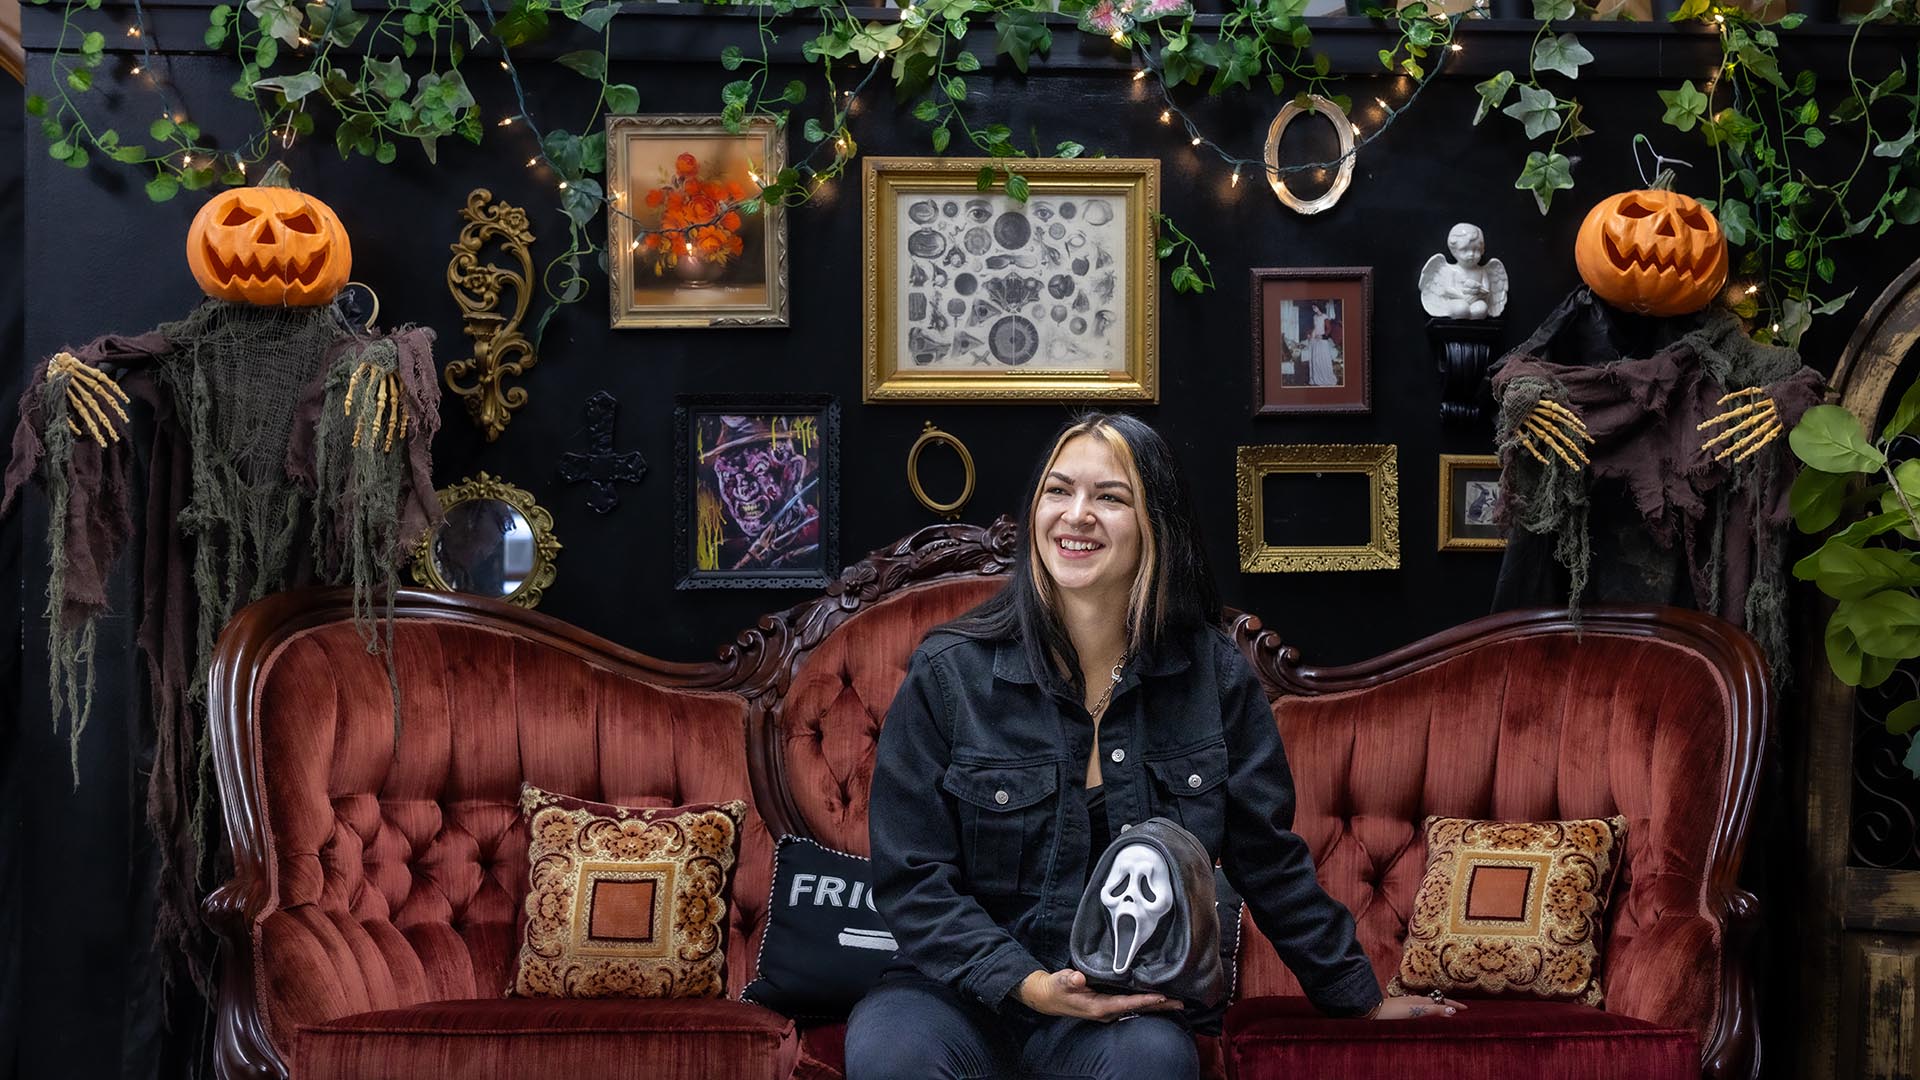 VIDEO: Horror shop owner brings dark arts to light